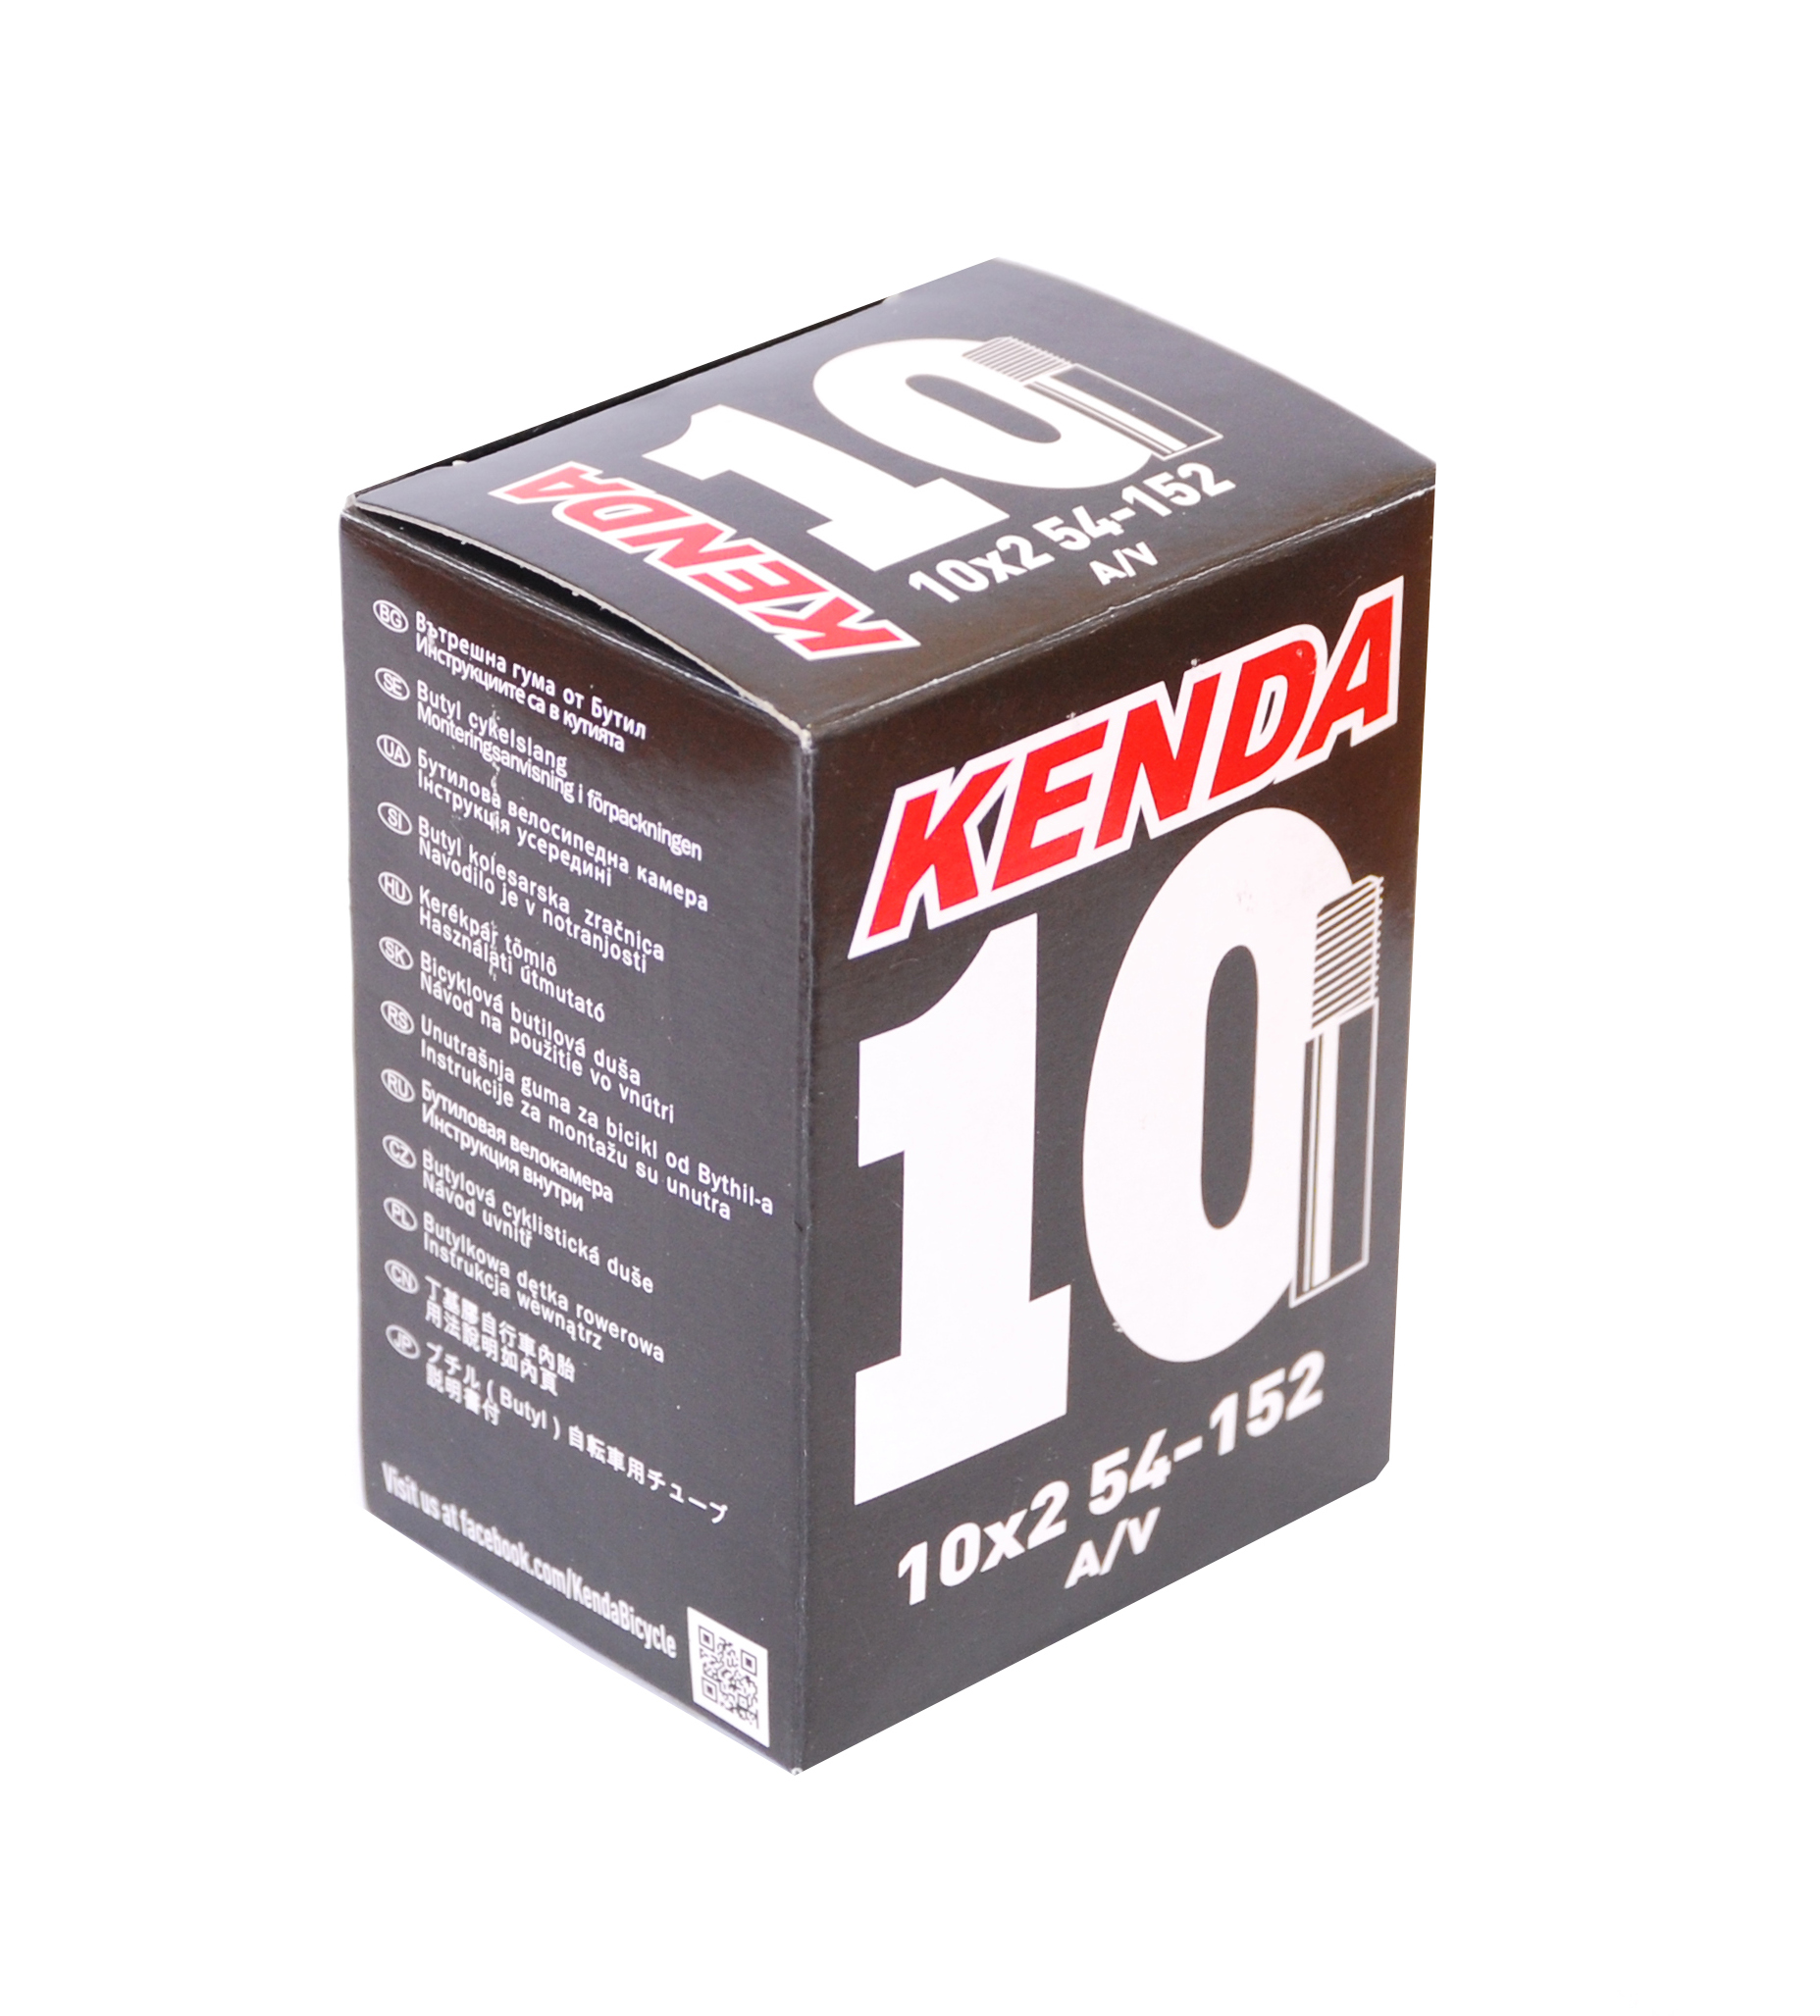 Камера KENDA 10" х 2.00", 54-152 авто